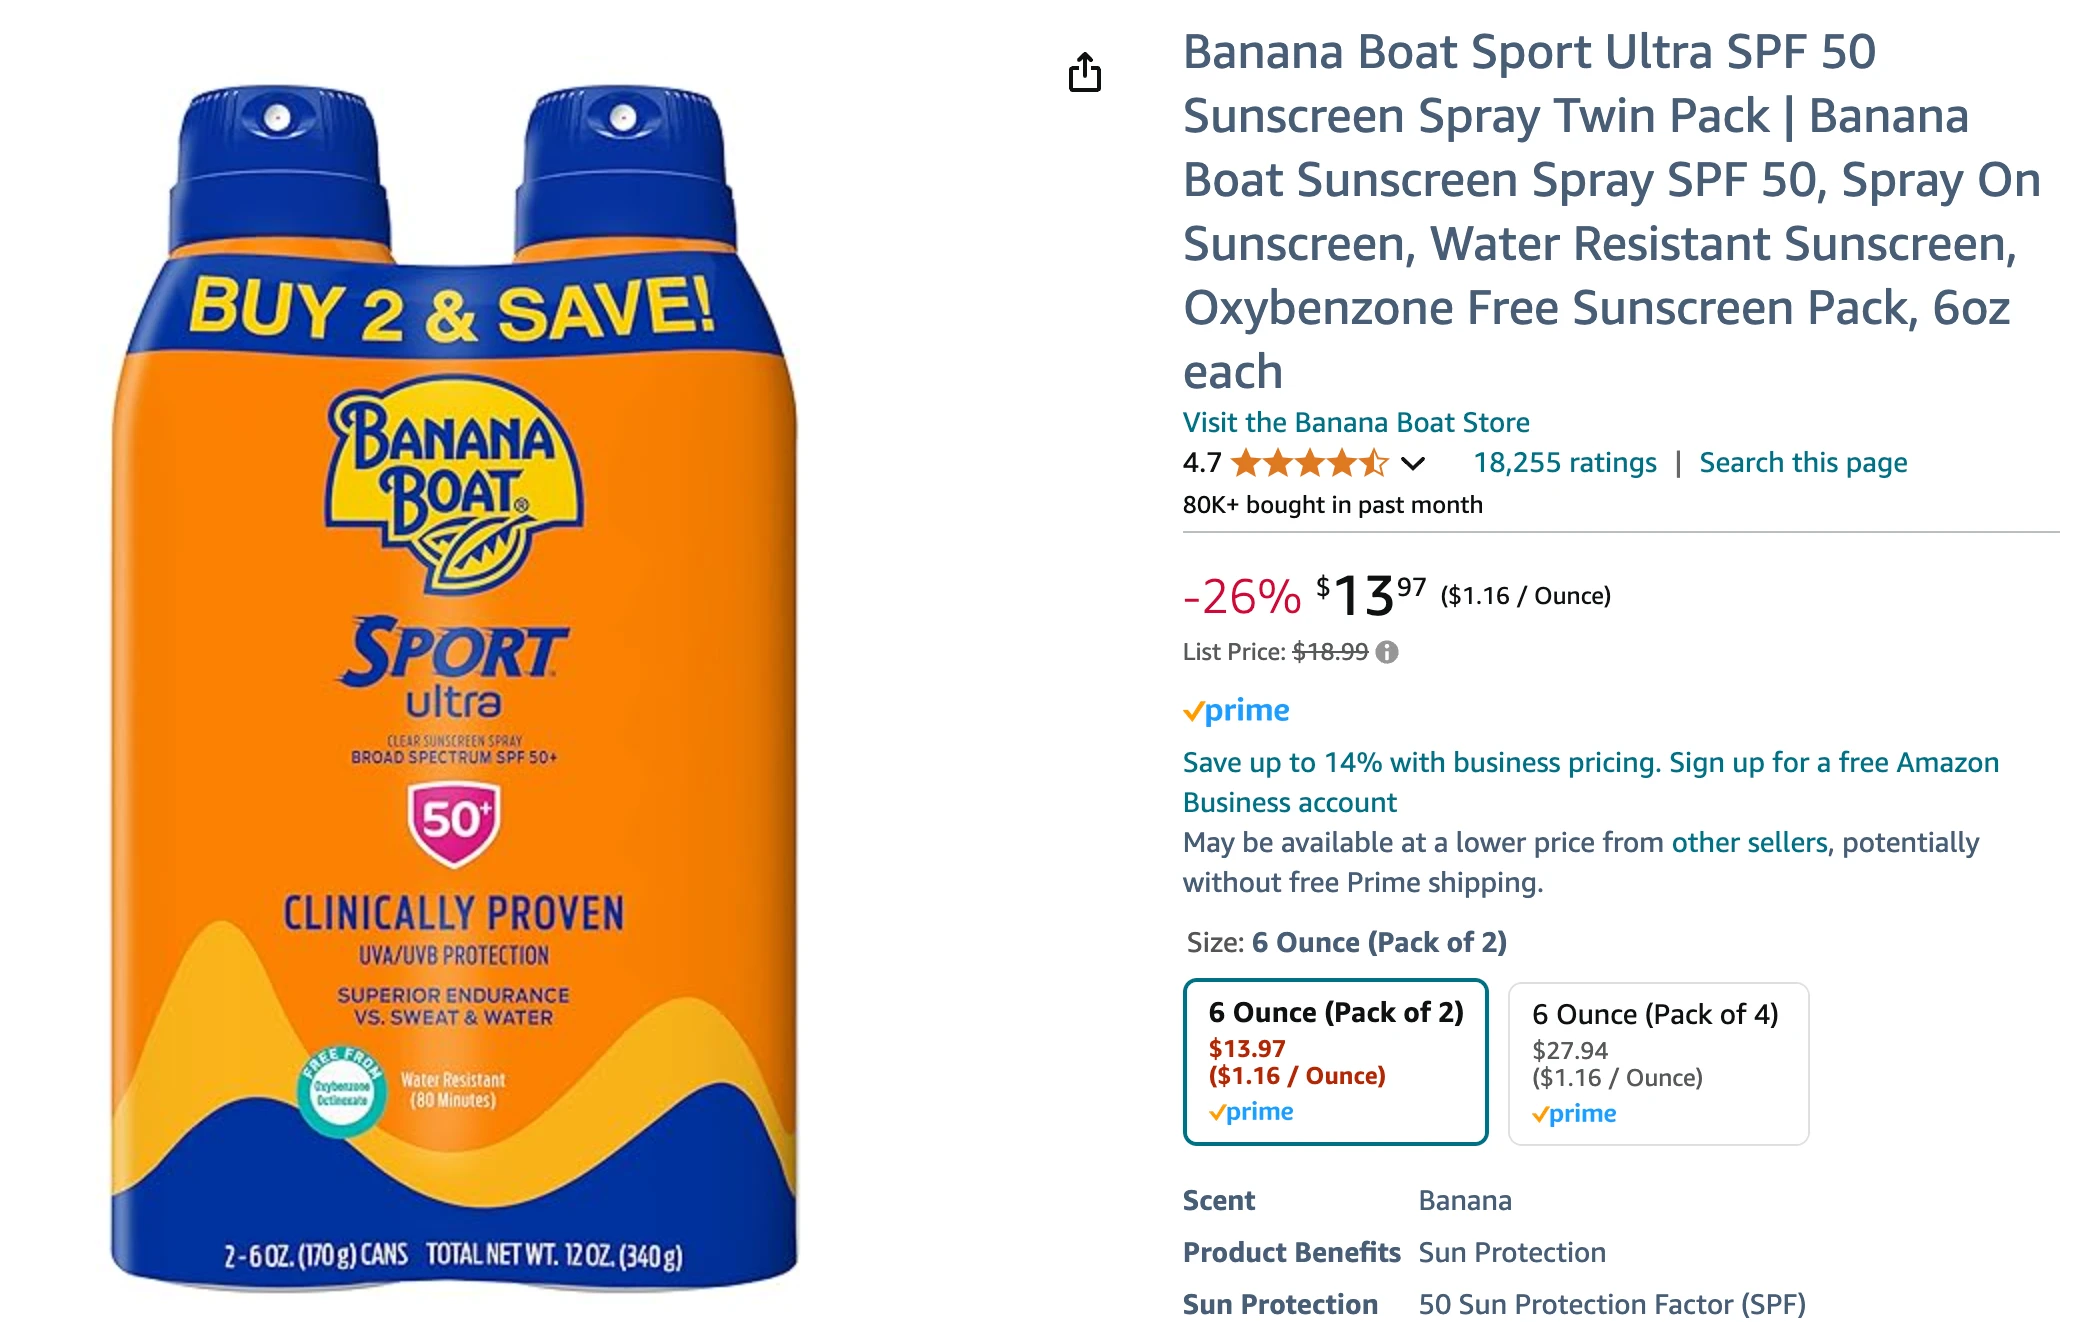 Sunscreen Amazon listing